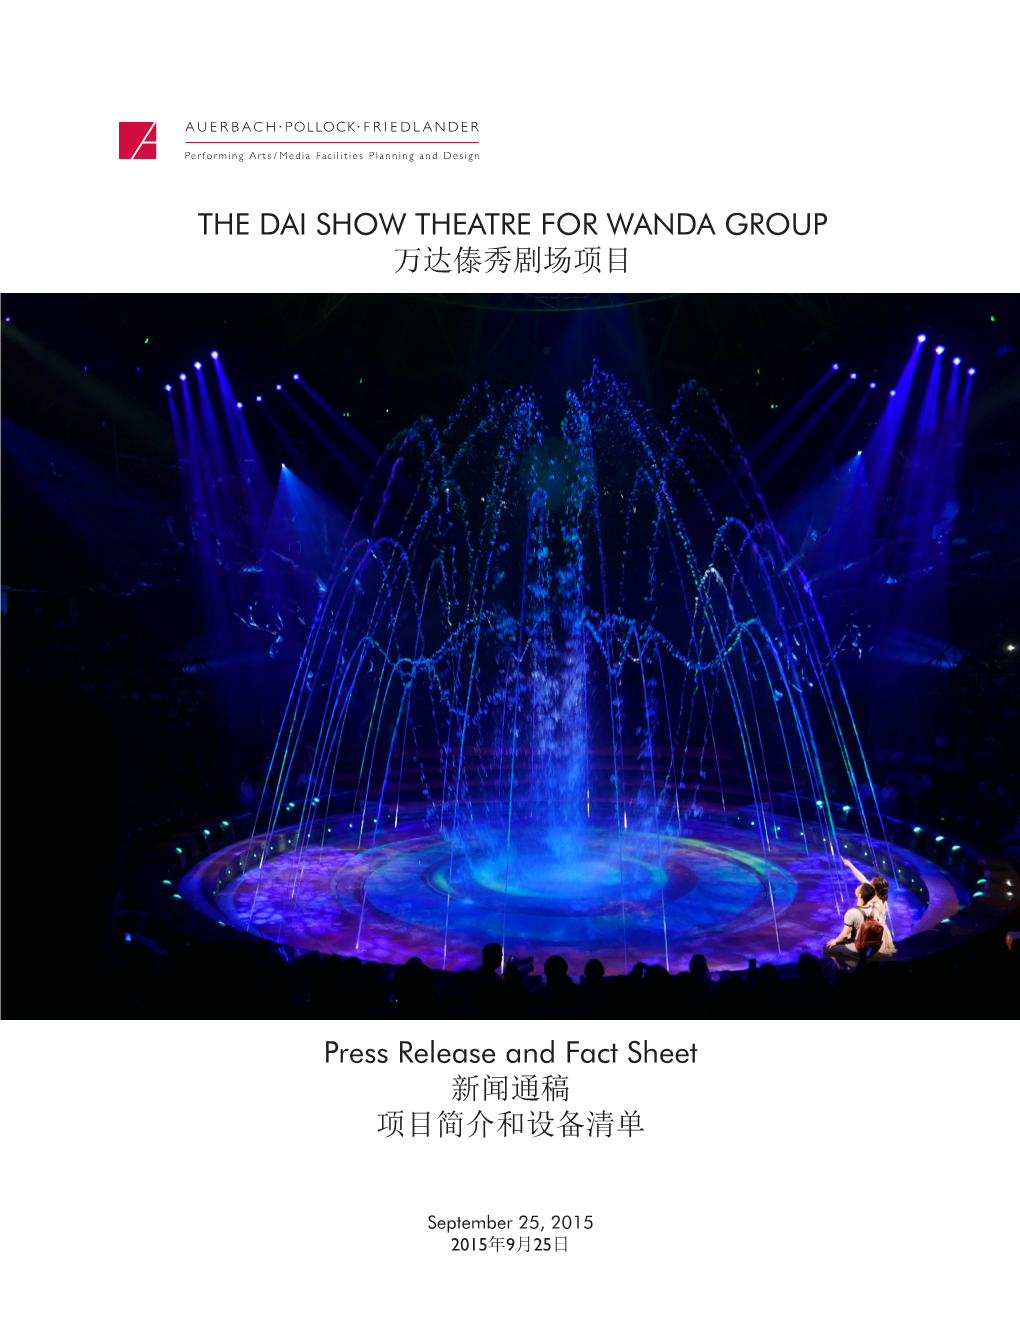 The Dai Show Theatre for Wanda Group 万达傣秀剧场项目